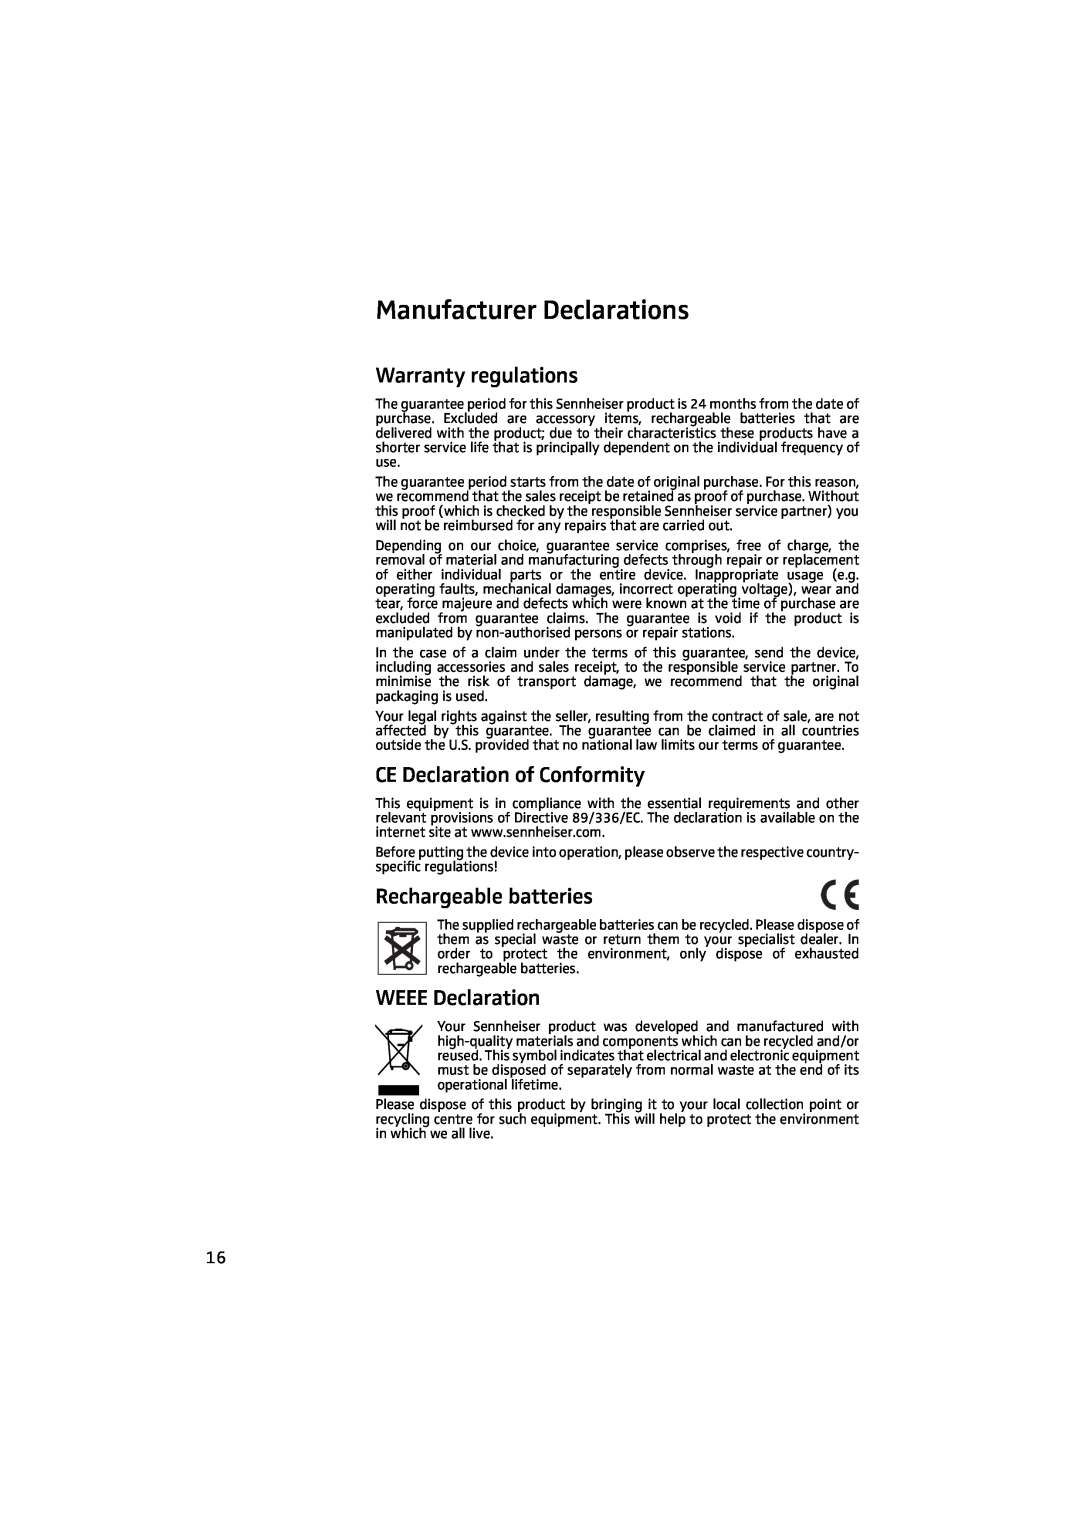 Sennheiser 50 manual Manufacturer Declarations, Warranty regulations, CE Declaration of Conformity, Rechargeable batteries 